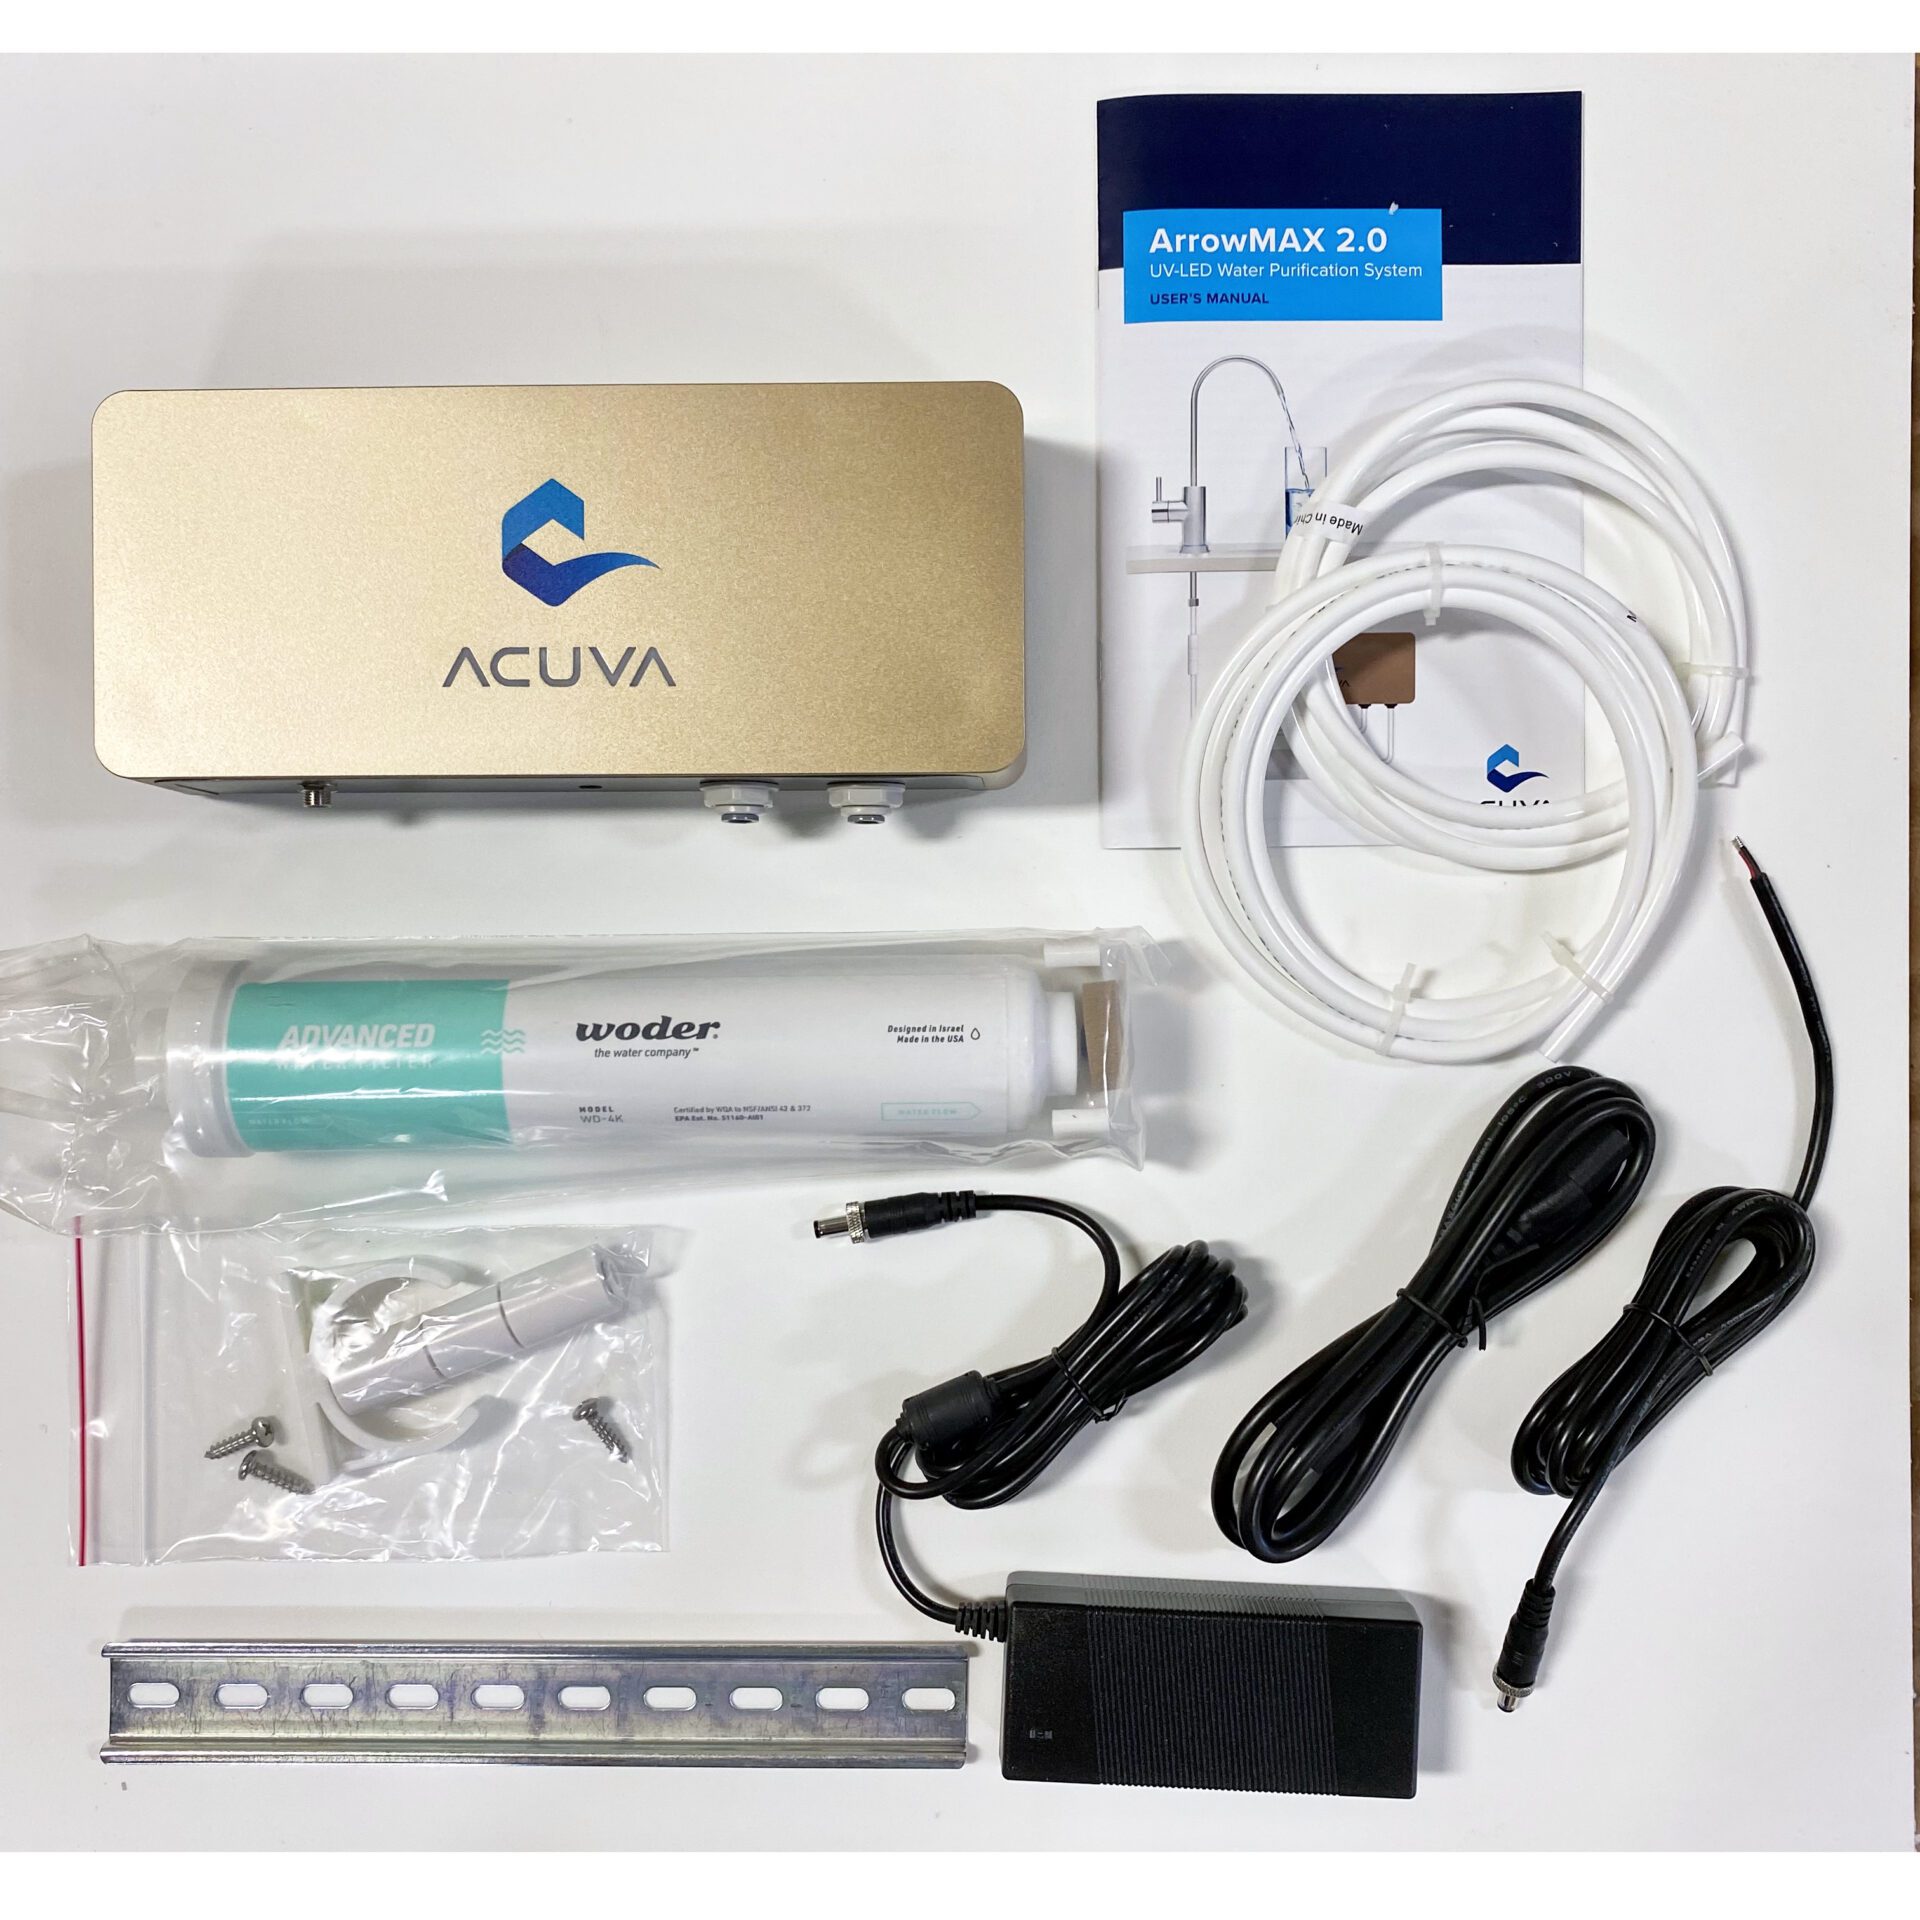 Acuva ArrowMax 2.0 12V AC/DC UV LED Water Purifier